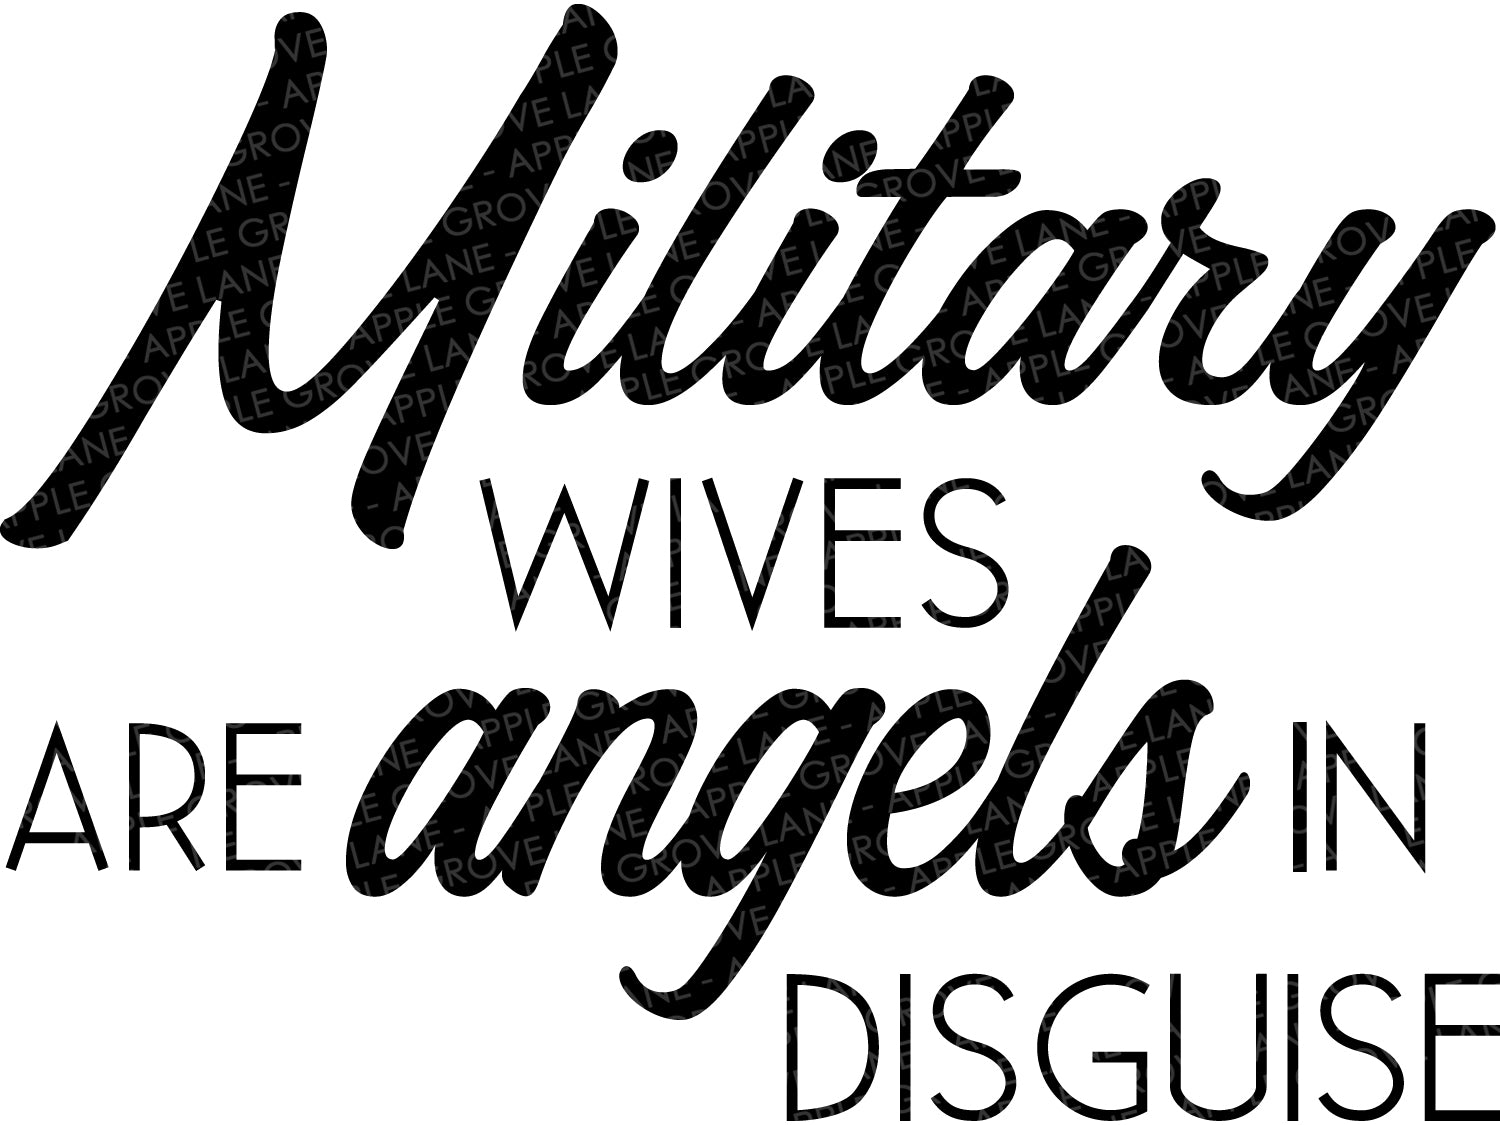 Military Wife Svg - Proud Military Wife - Military Svg - Army Wife Svg - Soldier Wife Svg - Army Svg - Military Family - Military Wife Shirt